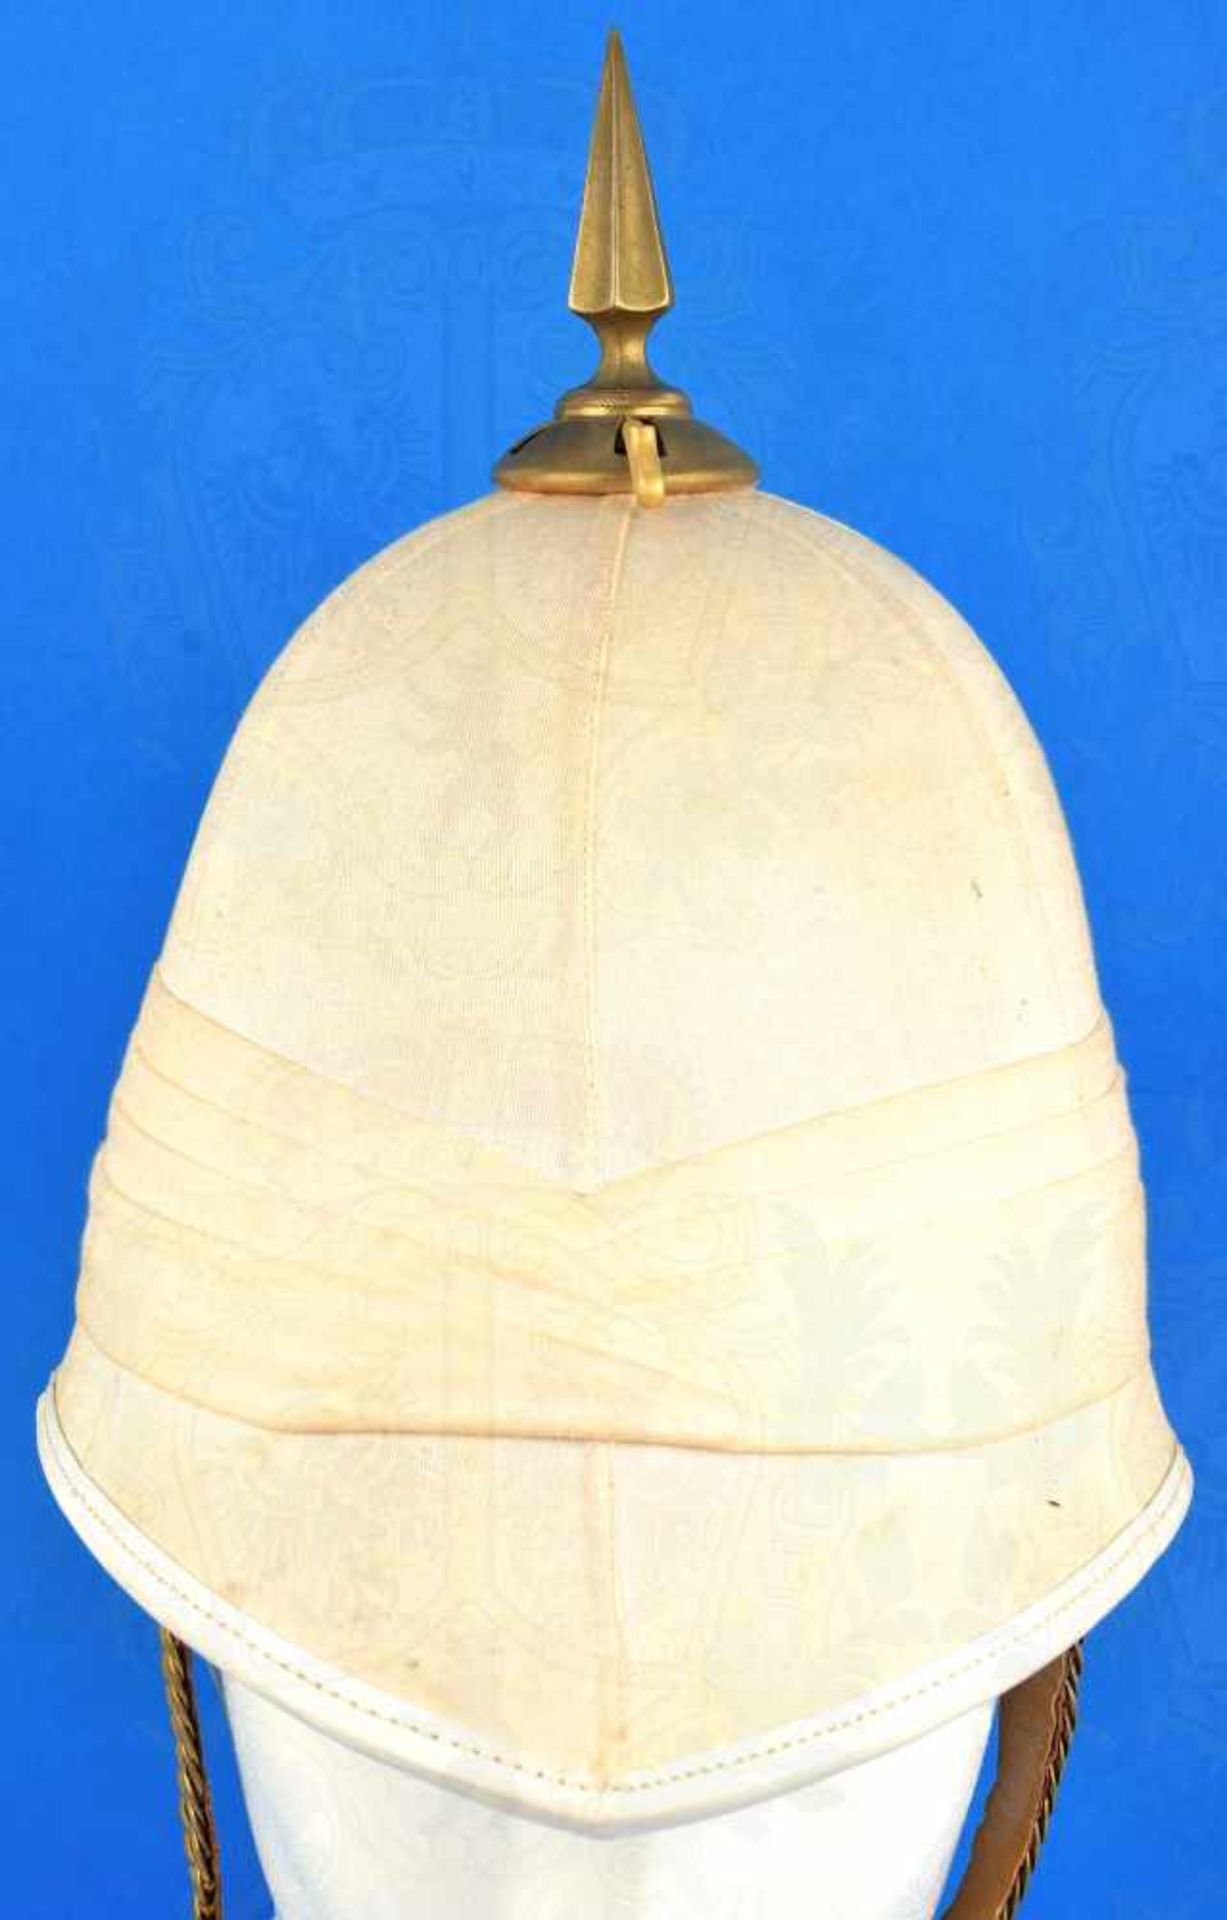 TROPENHELM, ältere Form m. Spitze, bez. „Waterproof Tropical Helmet Made in England“, weißer - Bild 2 aus 2